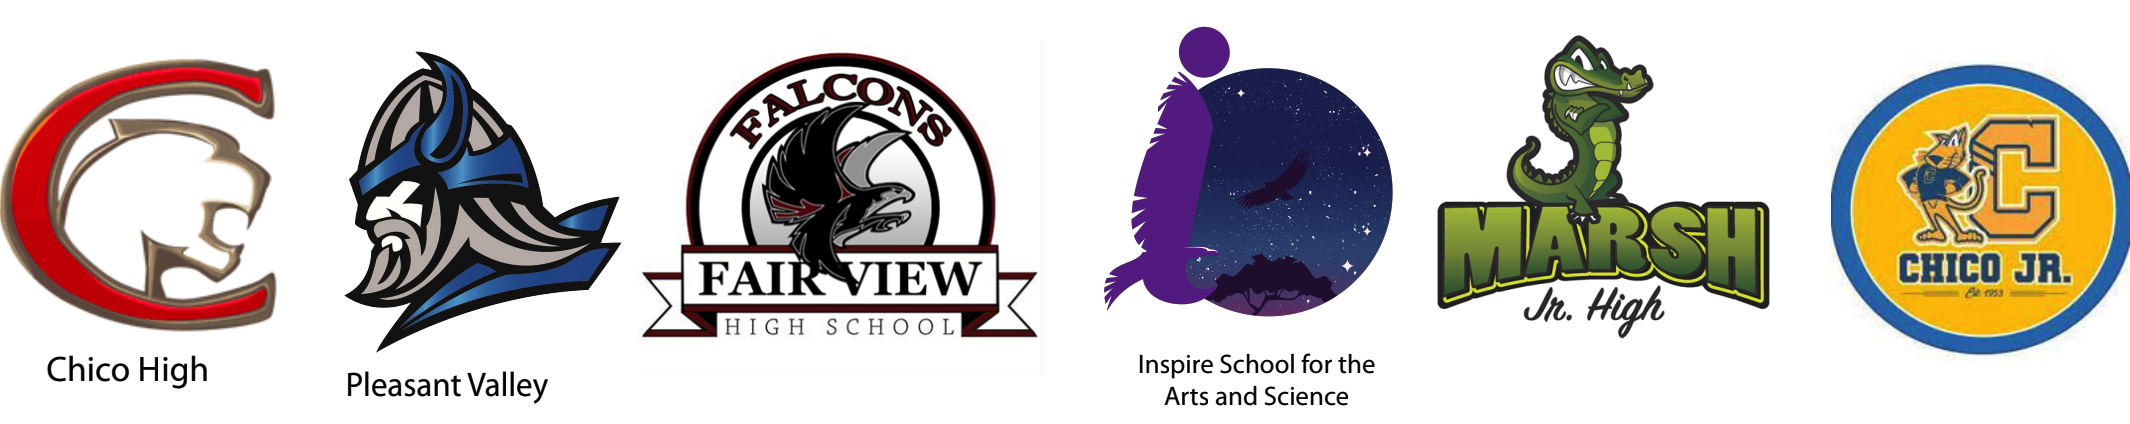 school_logos